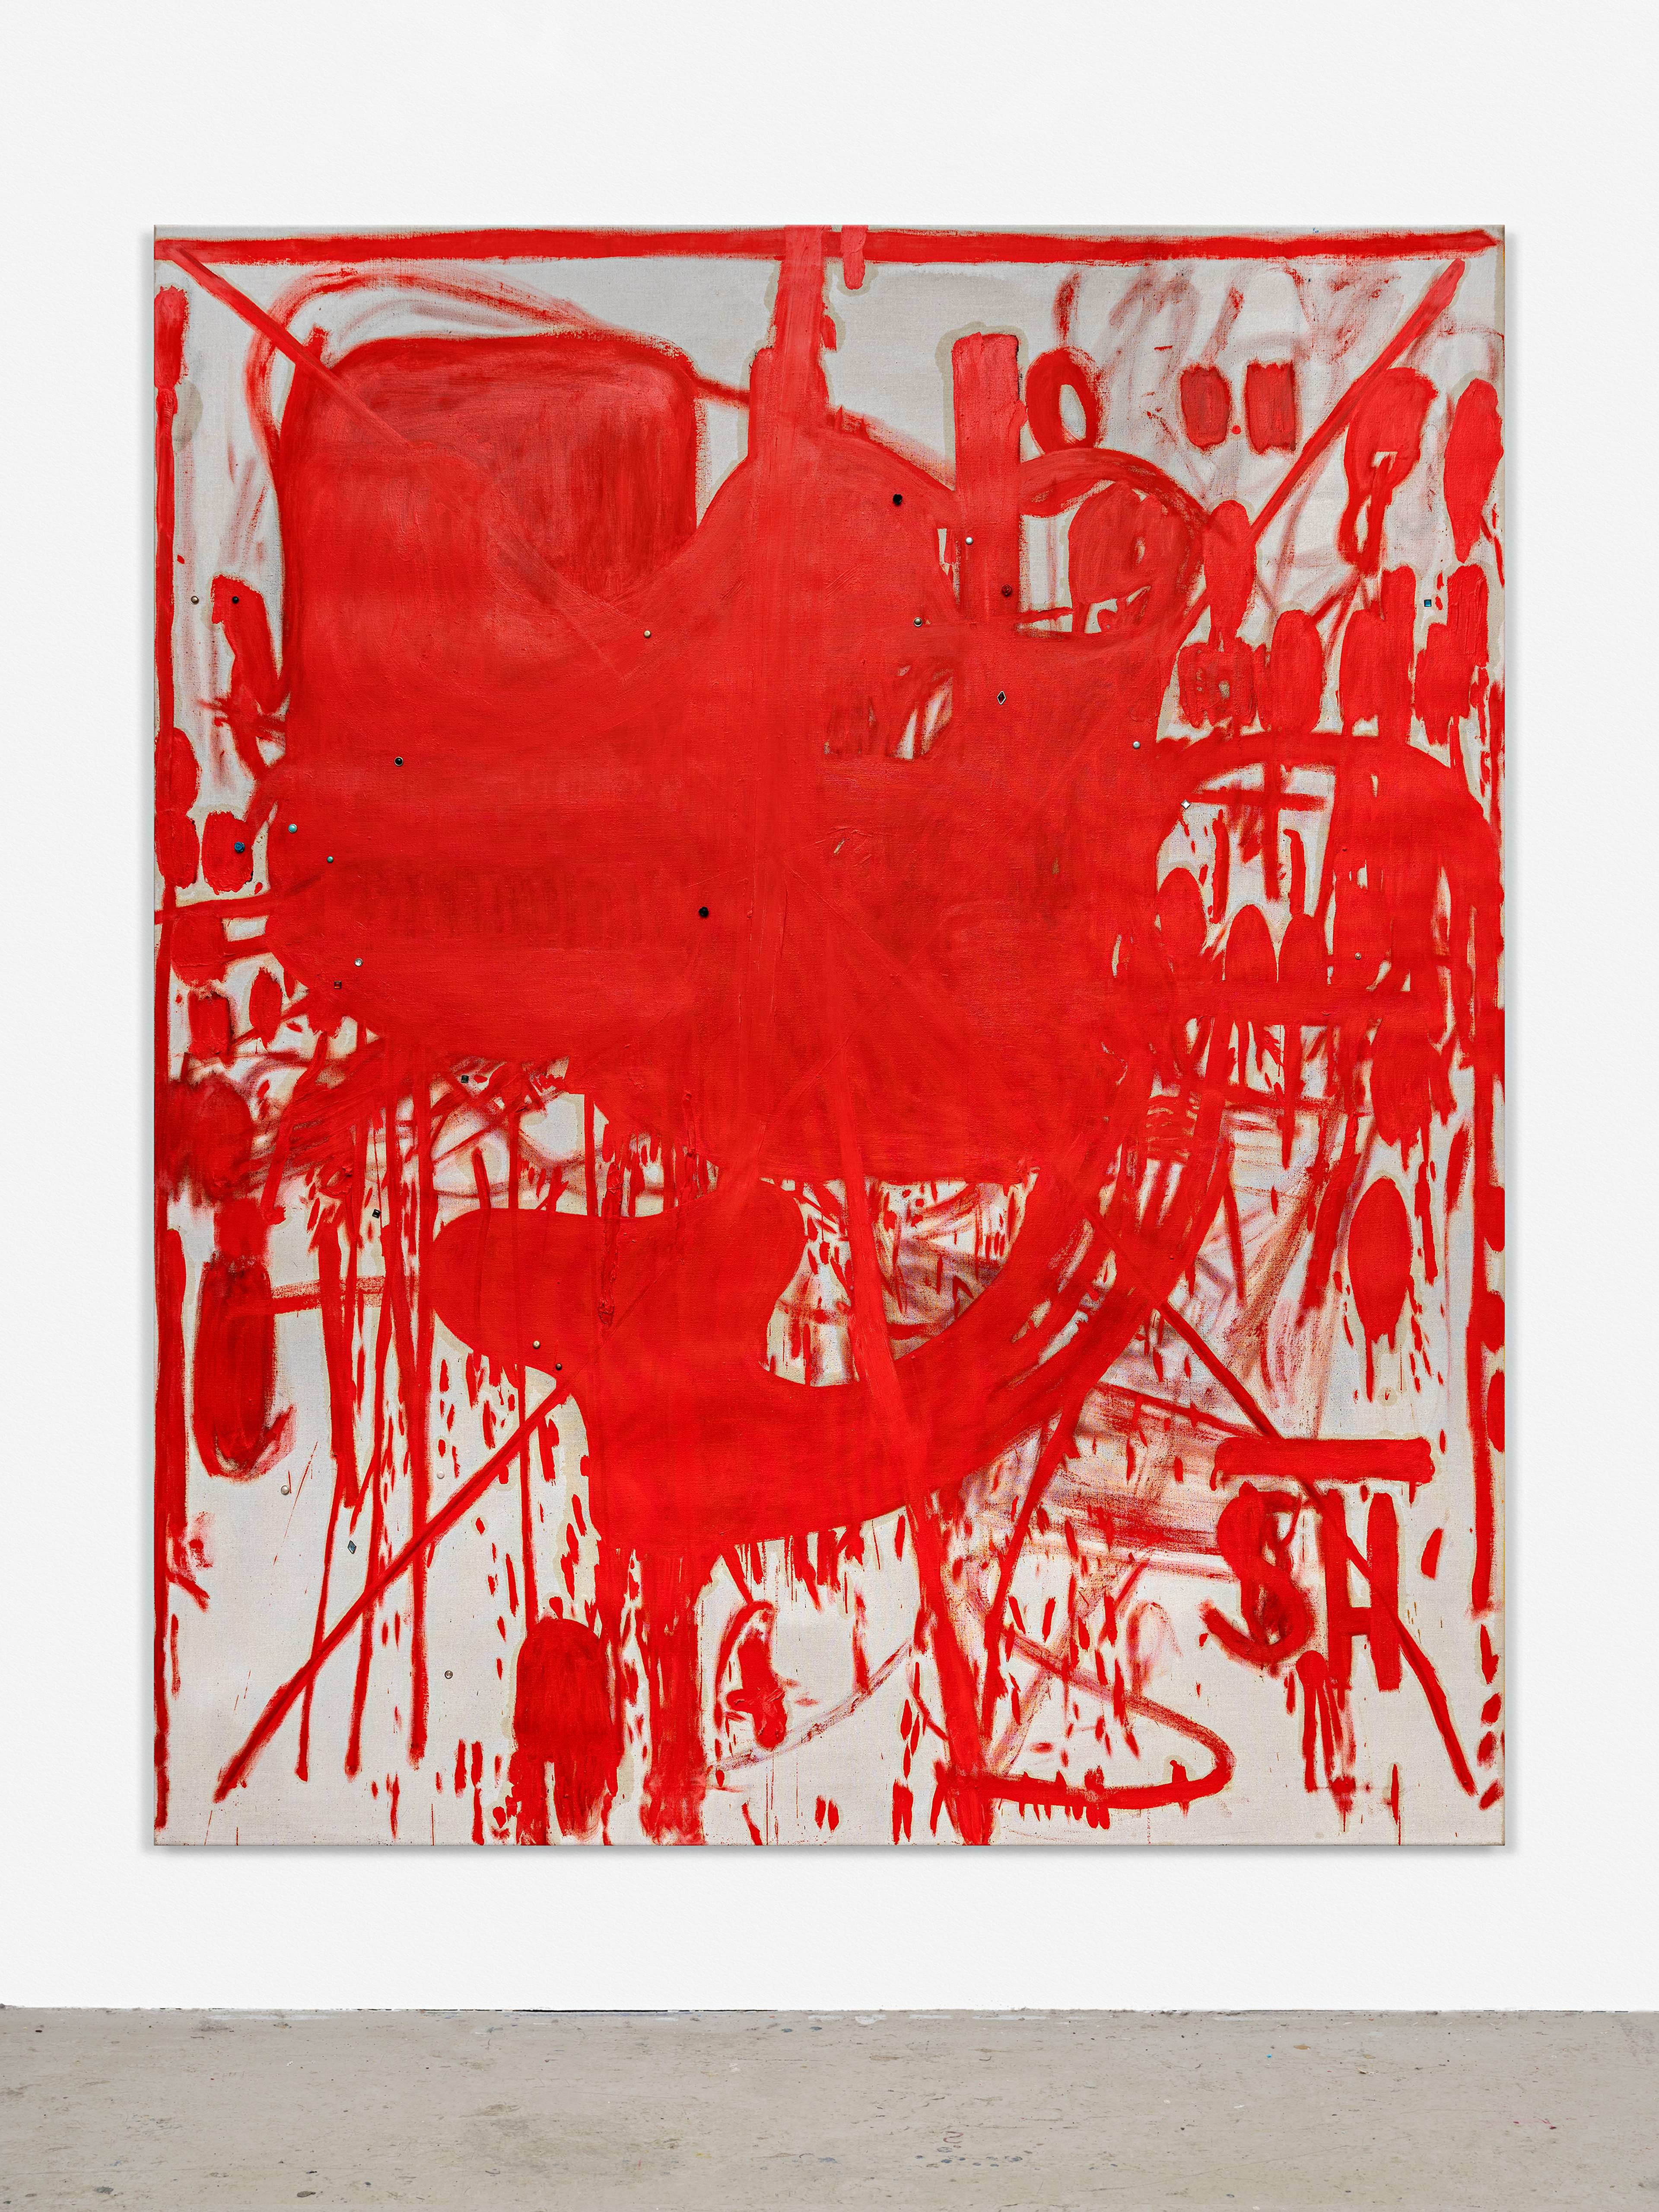 Sebastian Helling, Fire, 2014, oil paint on linen, 2020x183 cm